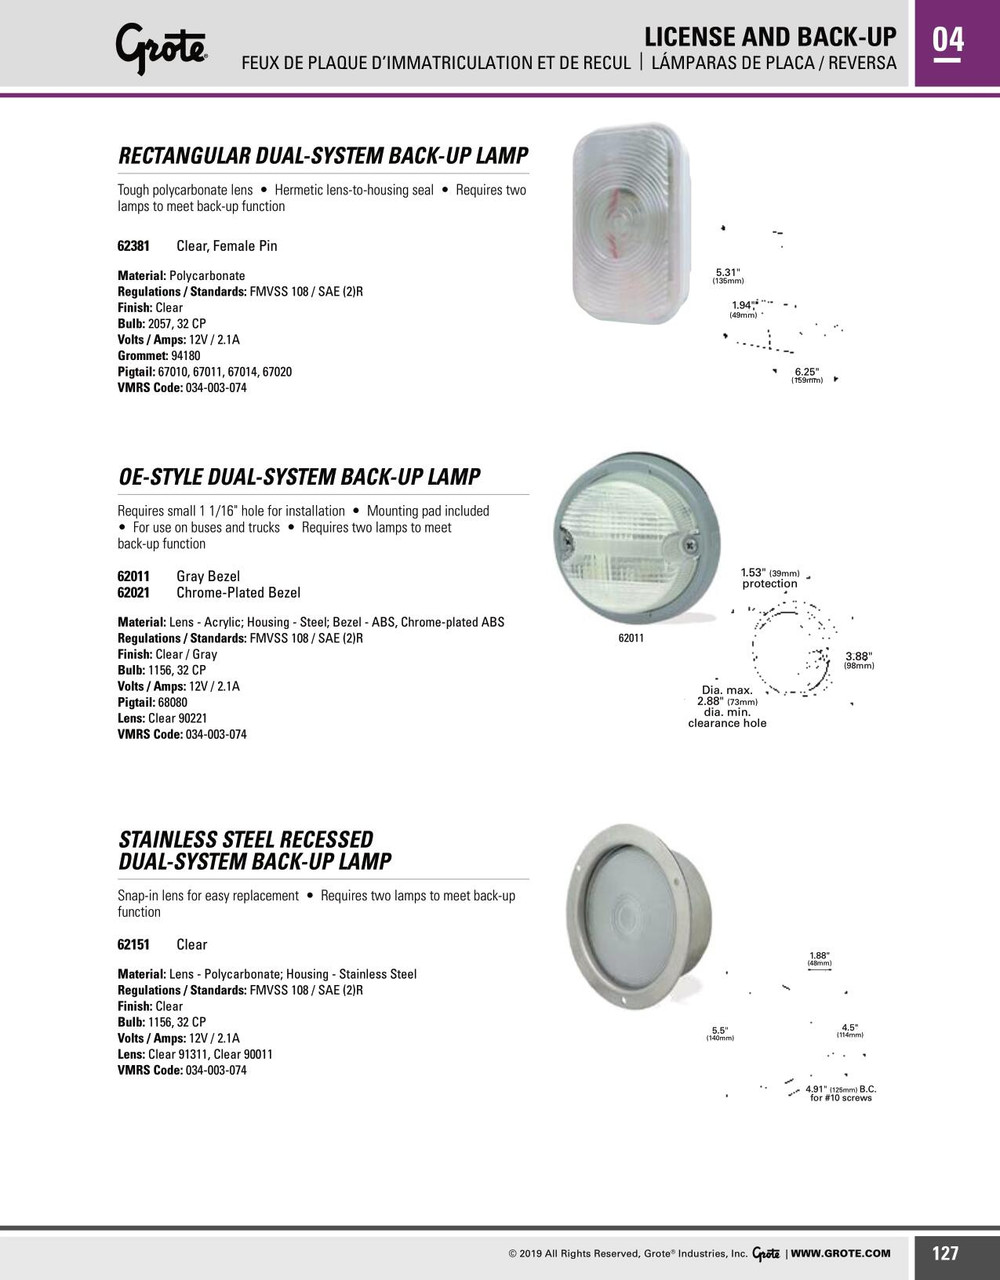 Rectangular Dual-System Backup Lamp w/Female Pin - Clear  62381